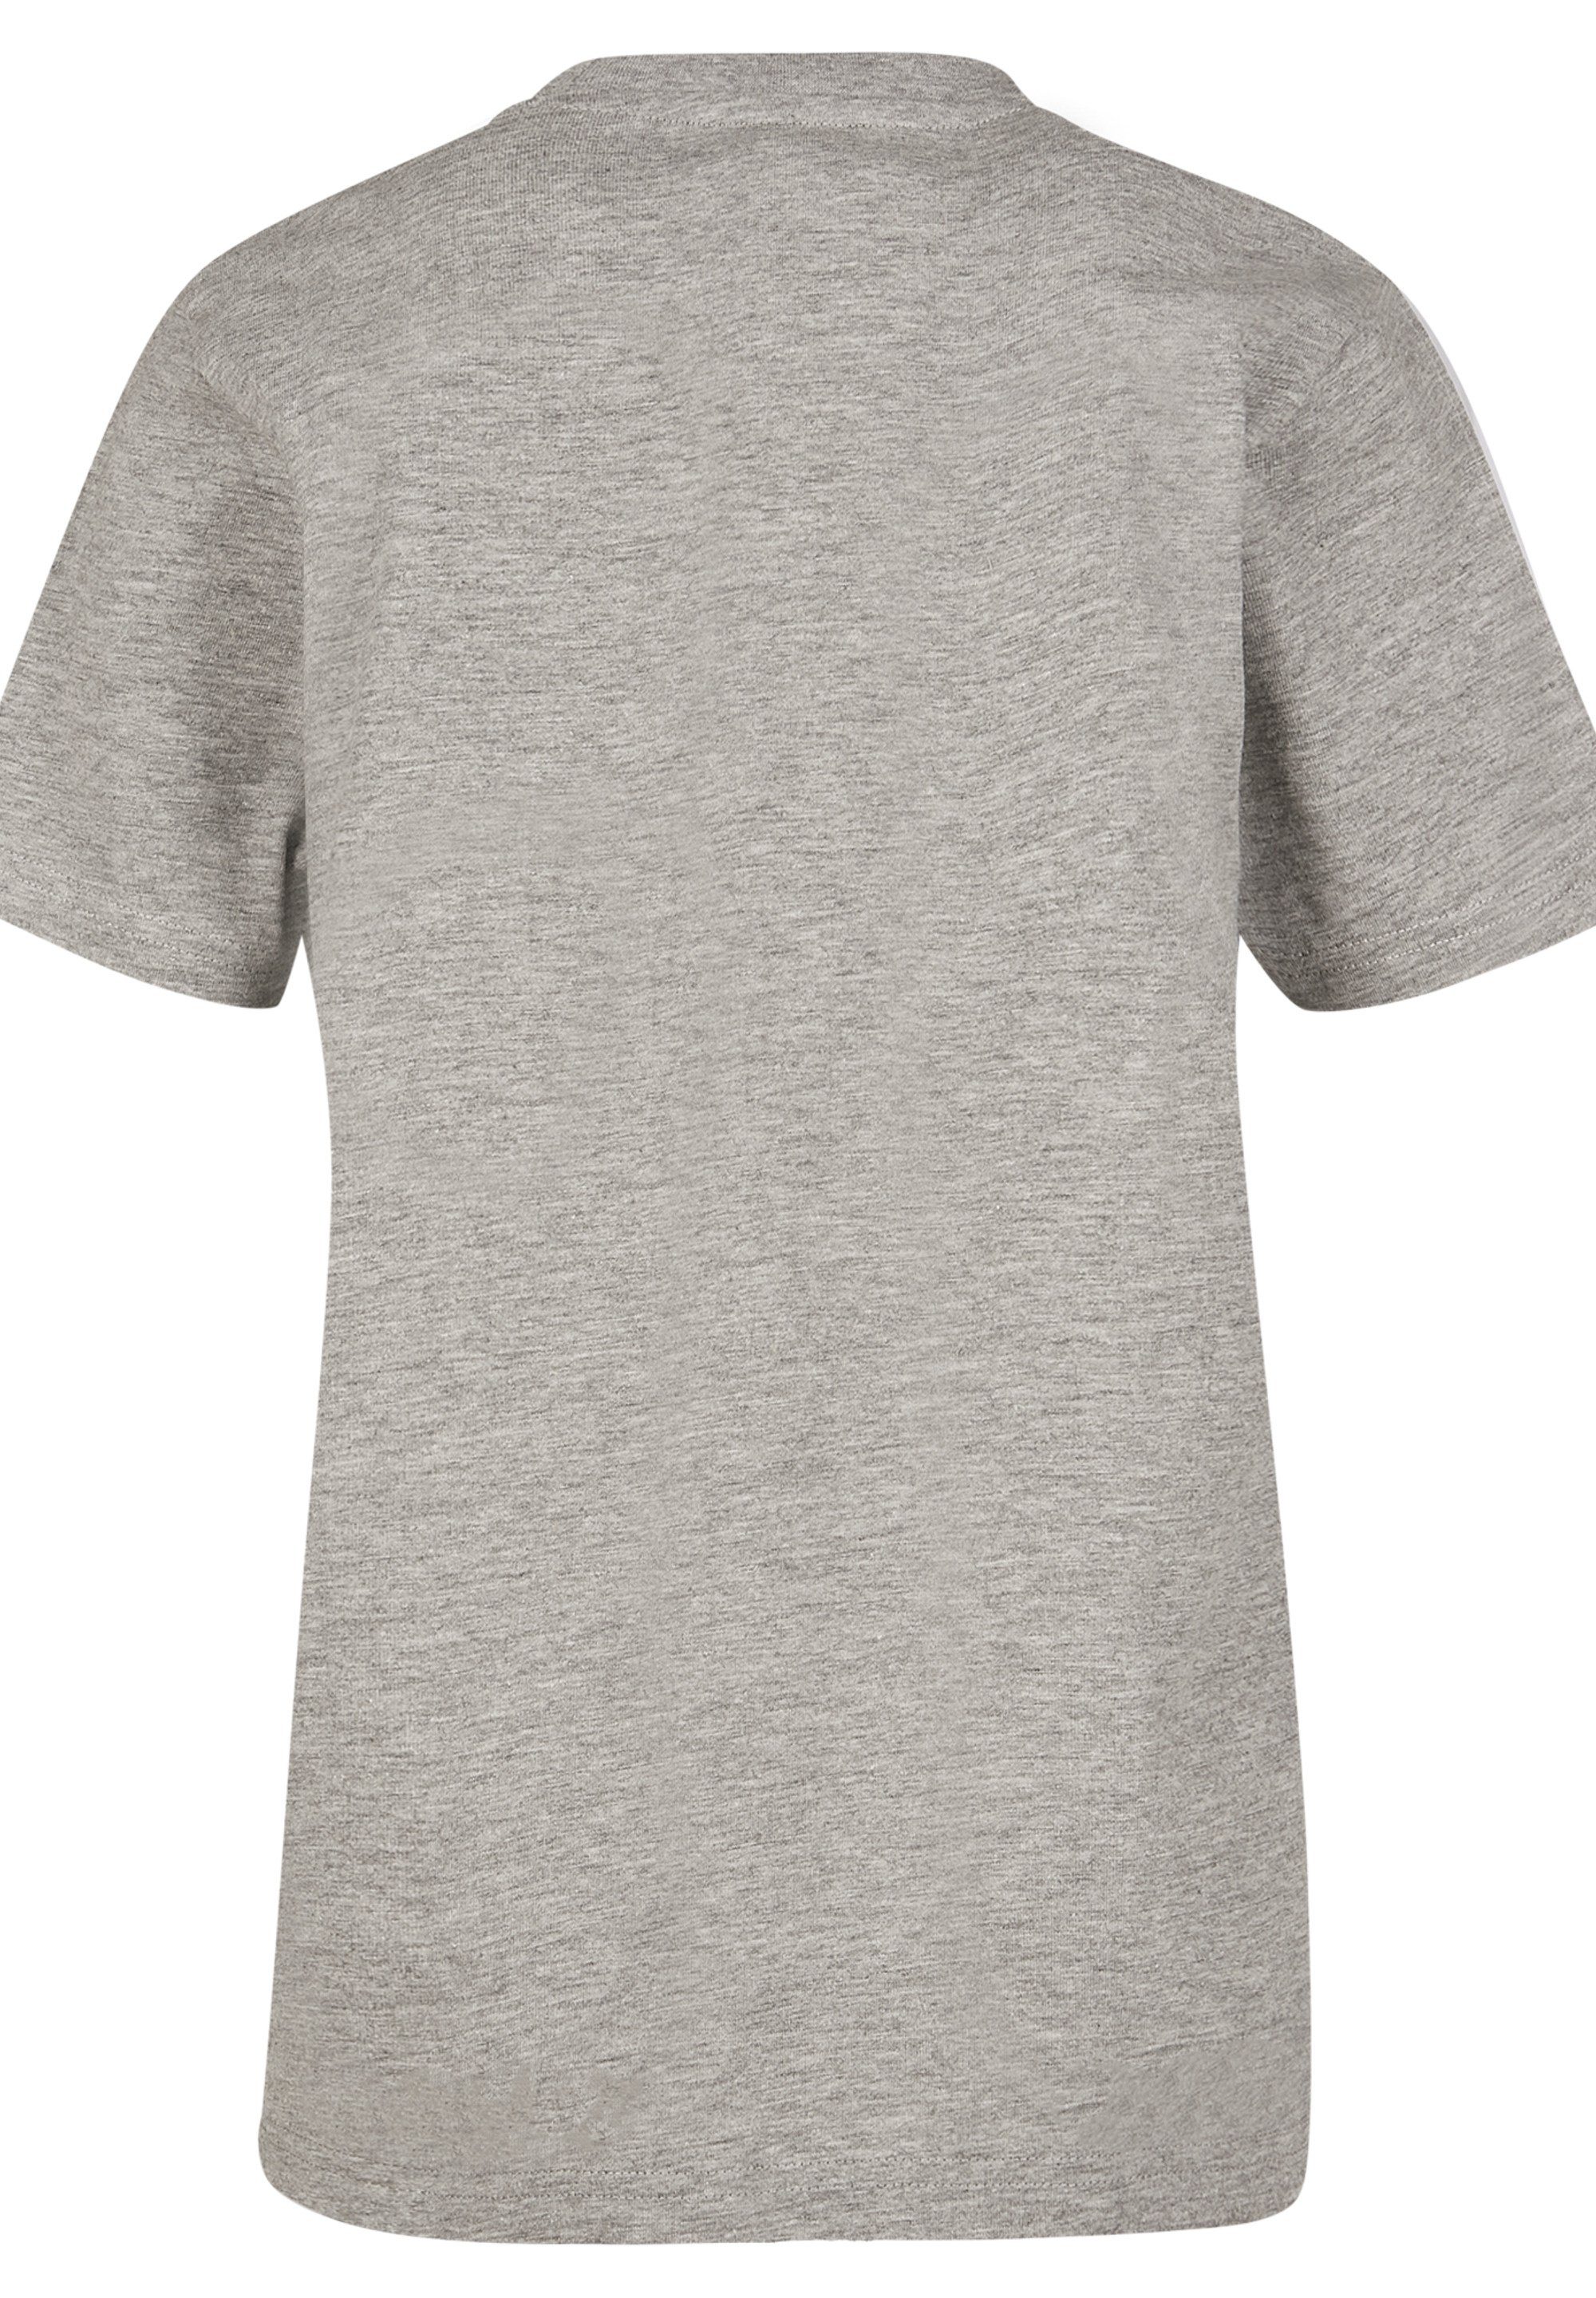 F4NT4STIC T-Shirt Harry Potter grey Sport Print Emblem Ravenclaw heather